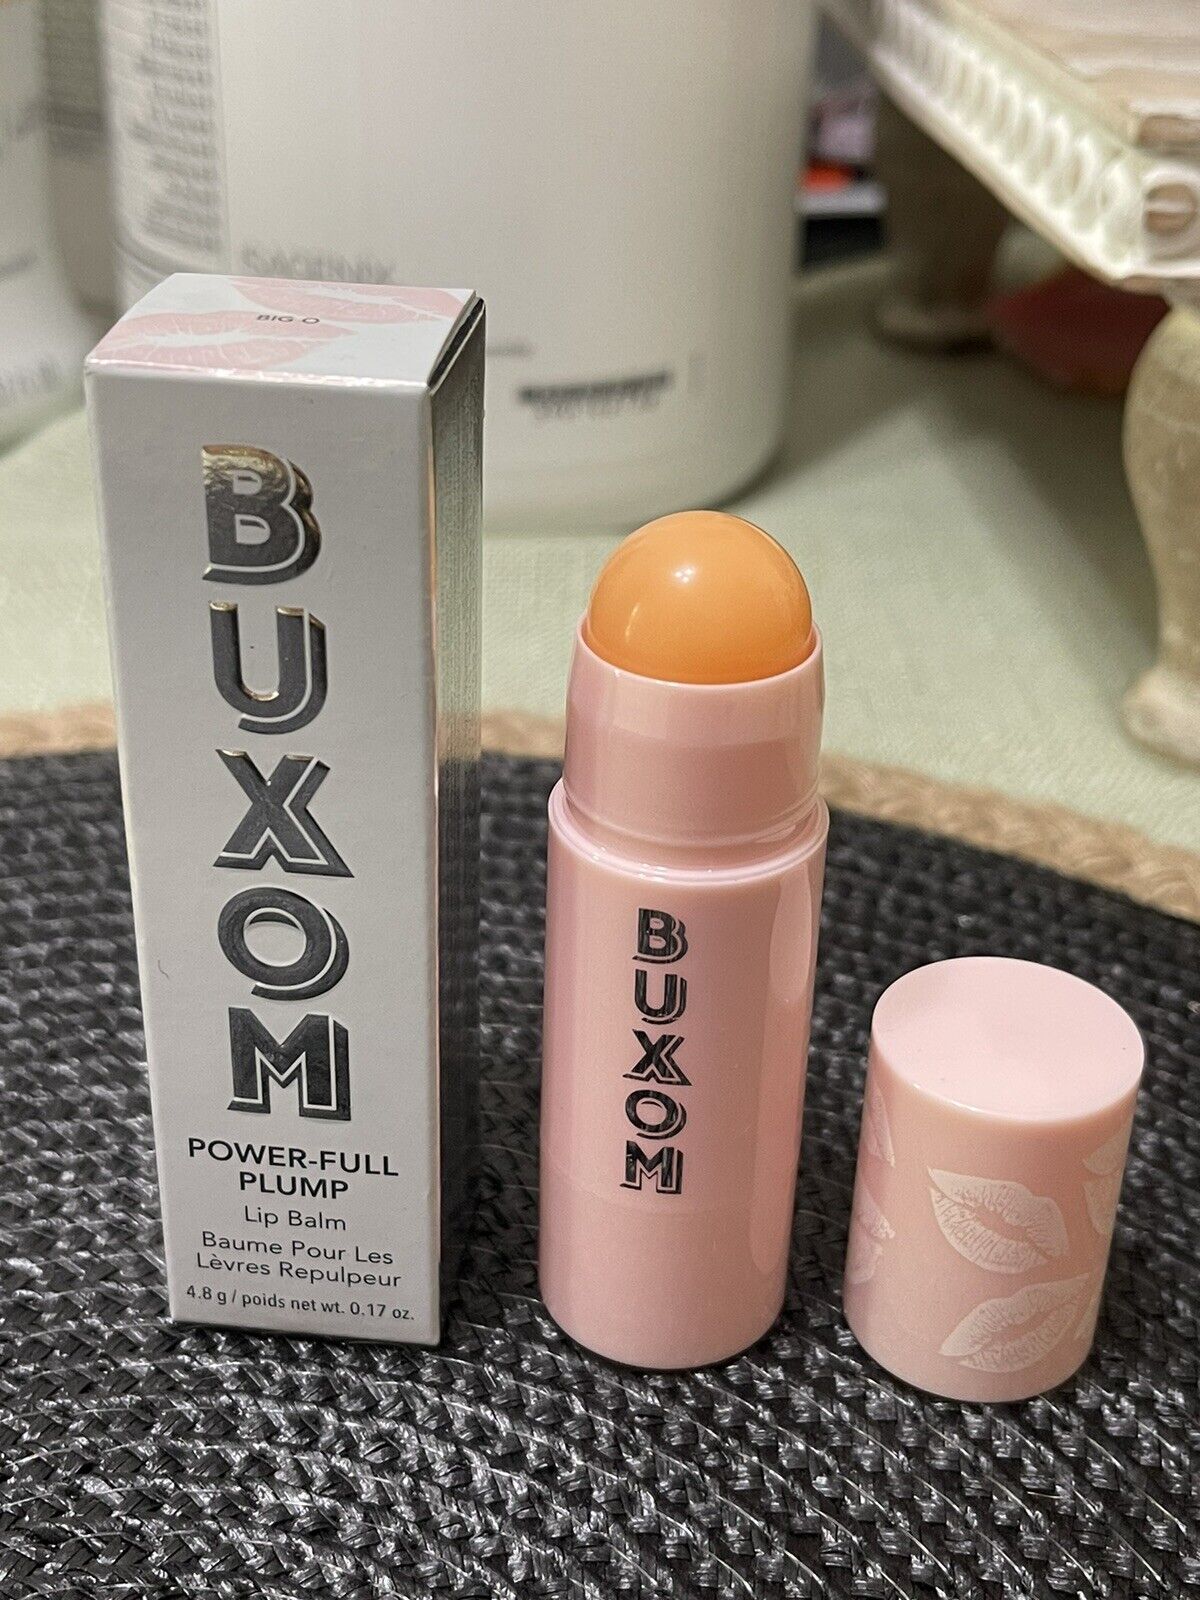 BUXOM Power-Full Plump Lip Balm - Big O - 0.17 oz New In Box Lowest Price